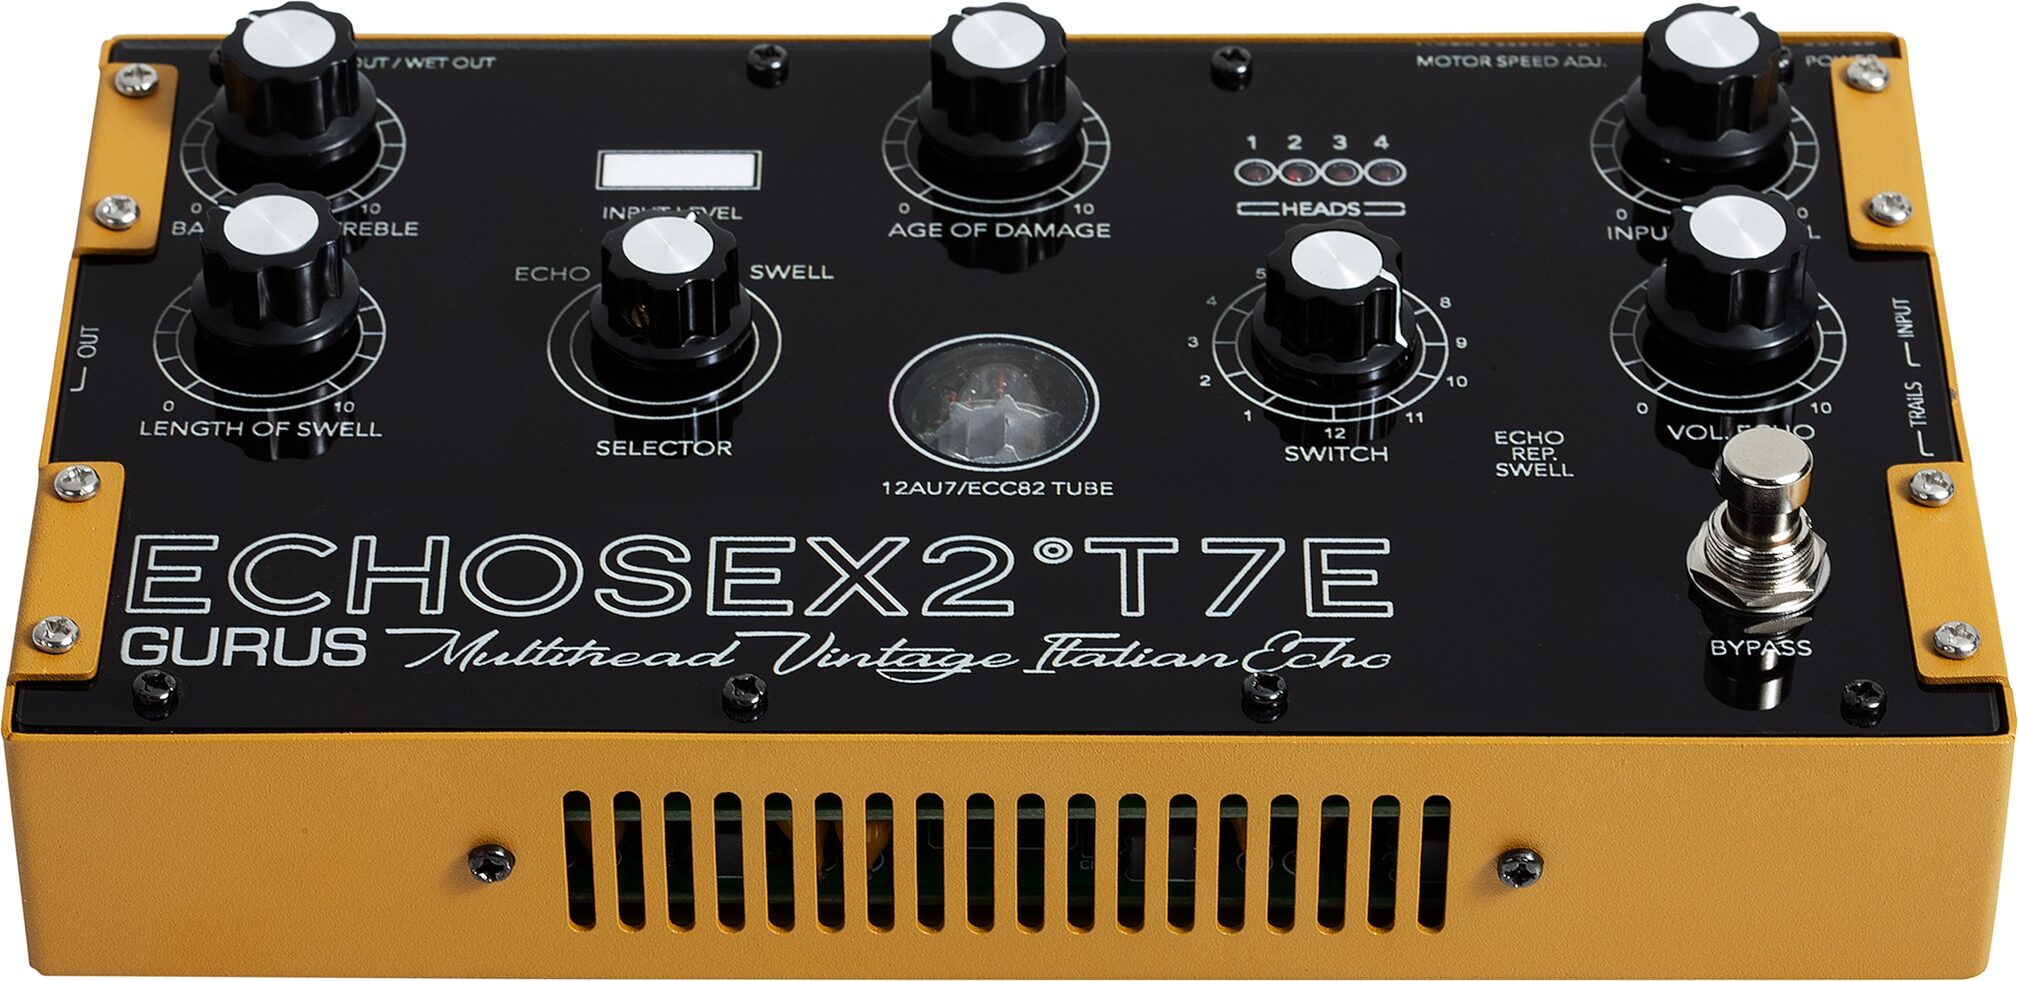 Gurus Echosex 2 T7E Echo Pedal | zZounds